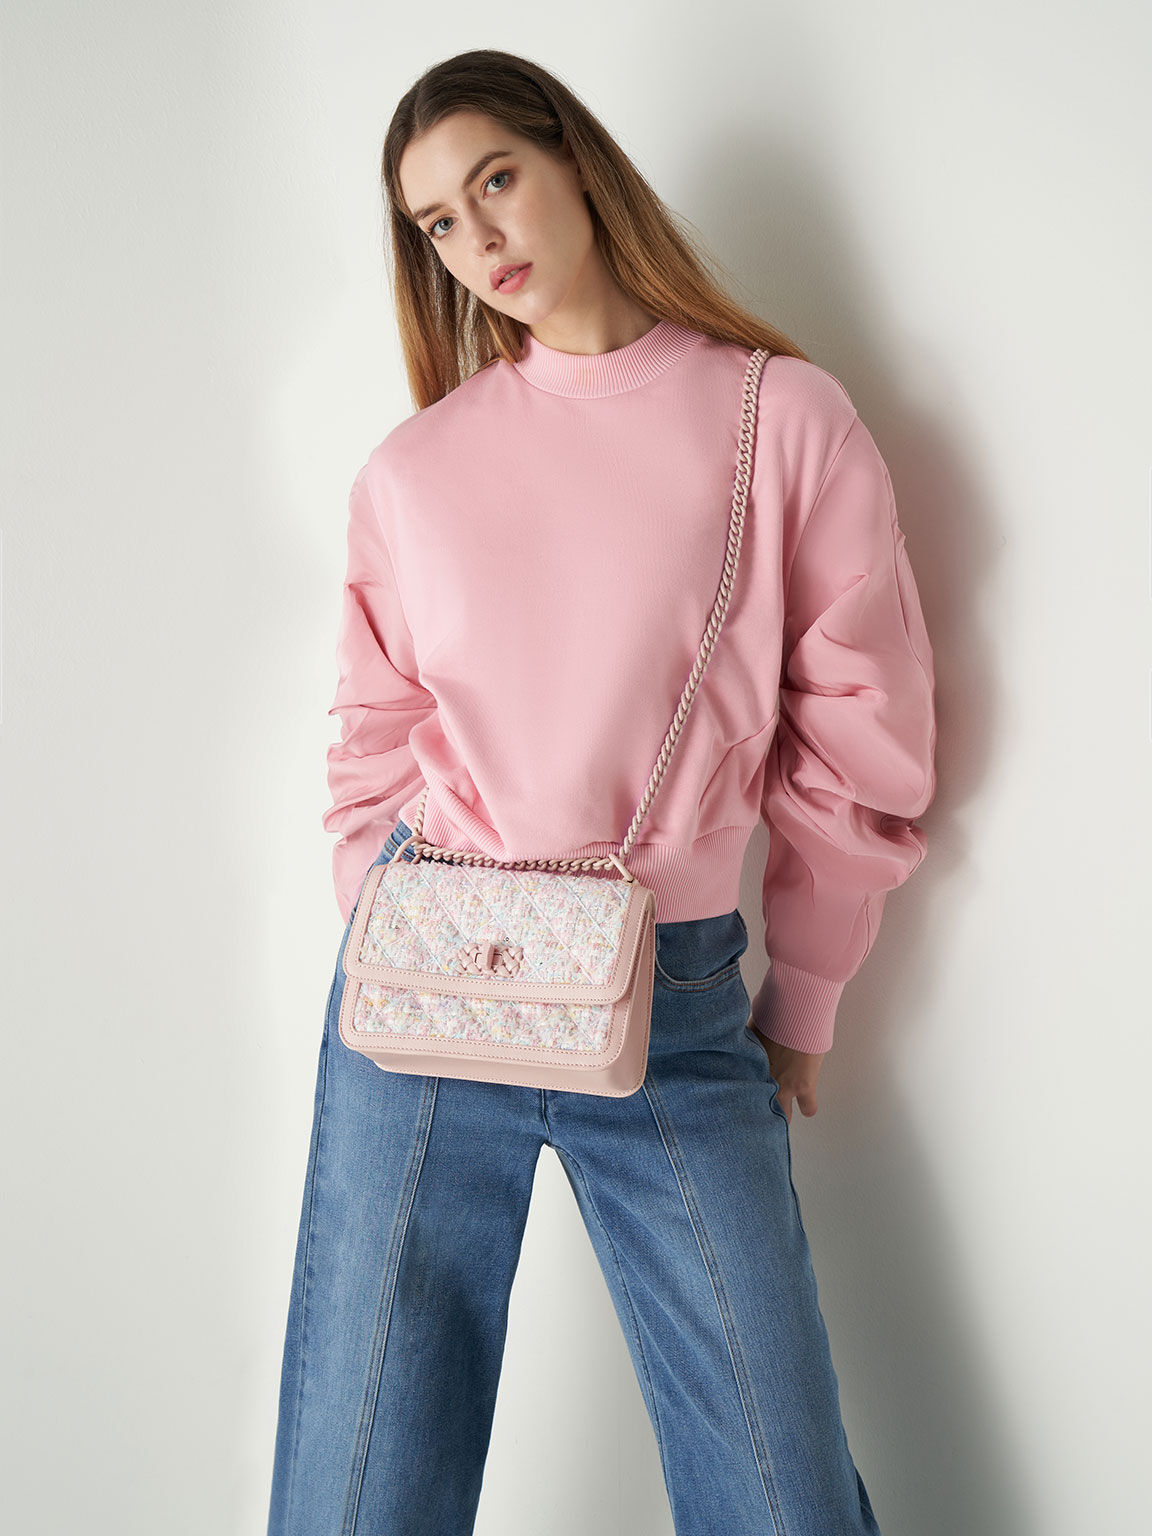 Charles & Keith - Women's Tweed Chain Strap Bag, Pink, M